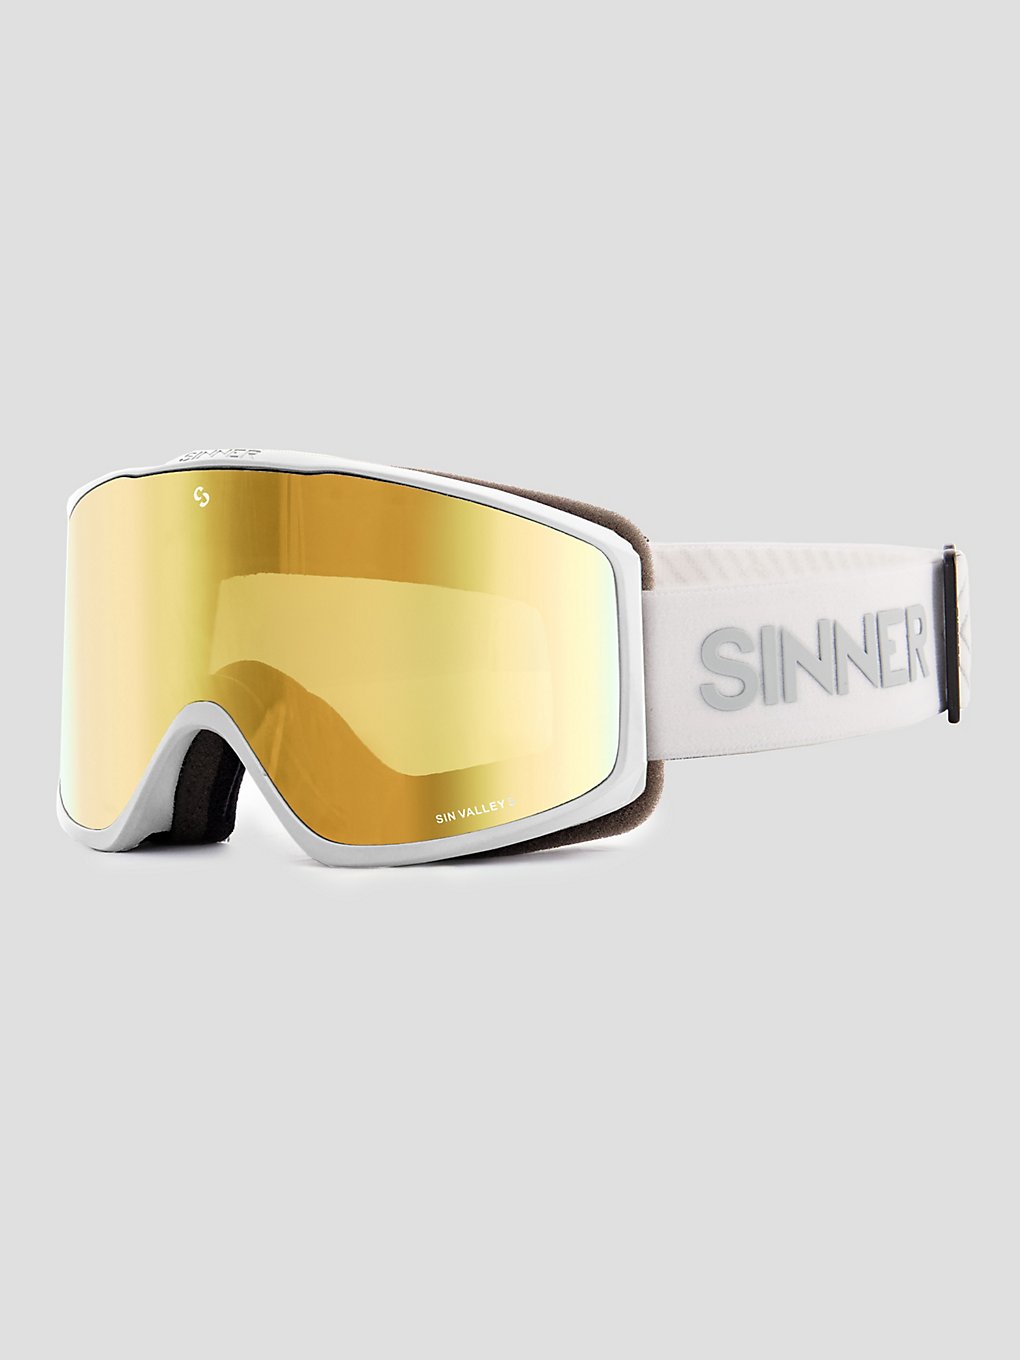 Sinner Sin Valley S Matte wit (+Bonus Lens) Skibril wit